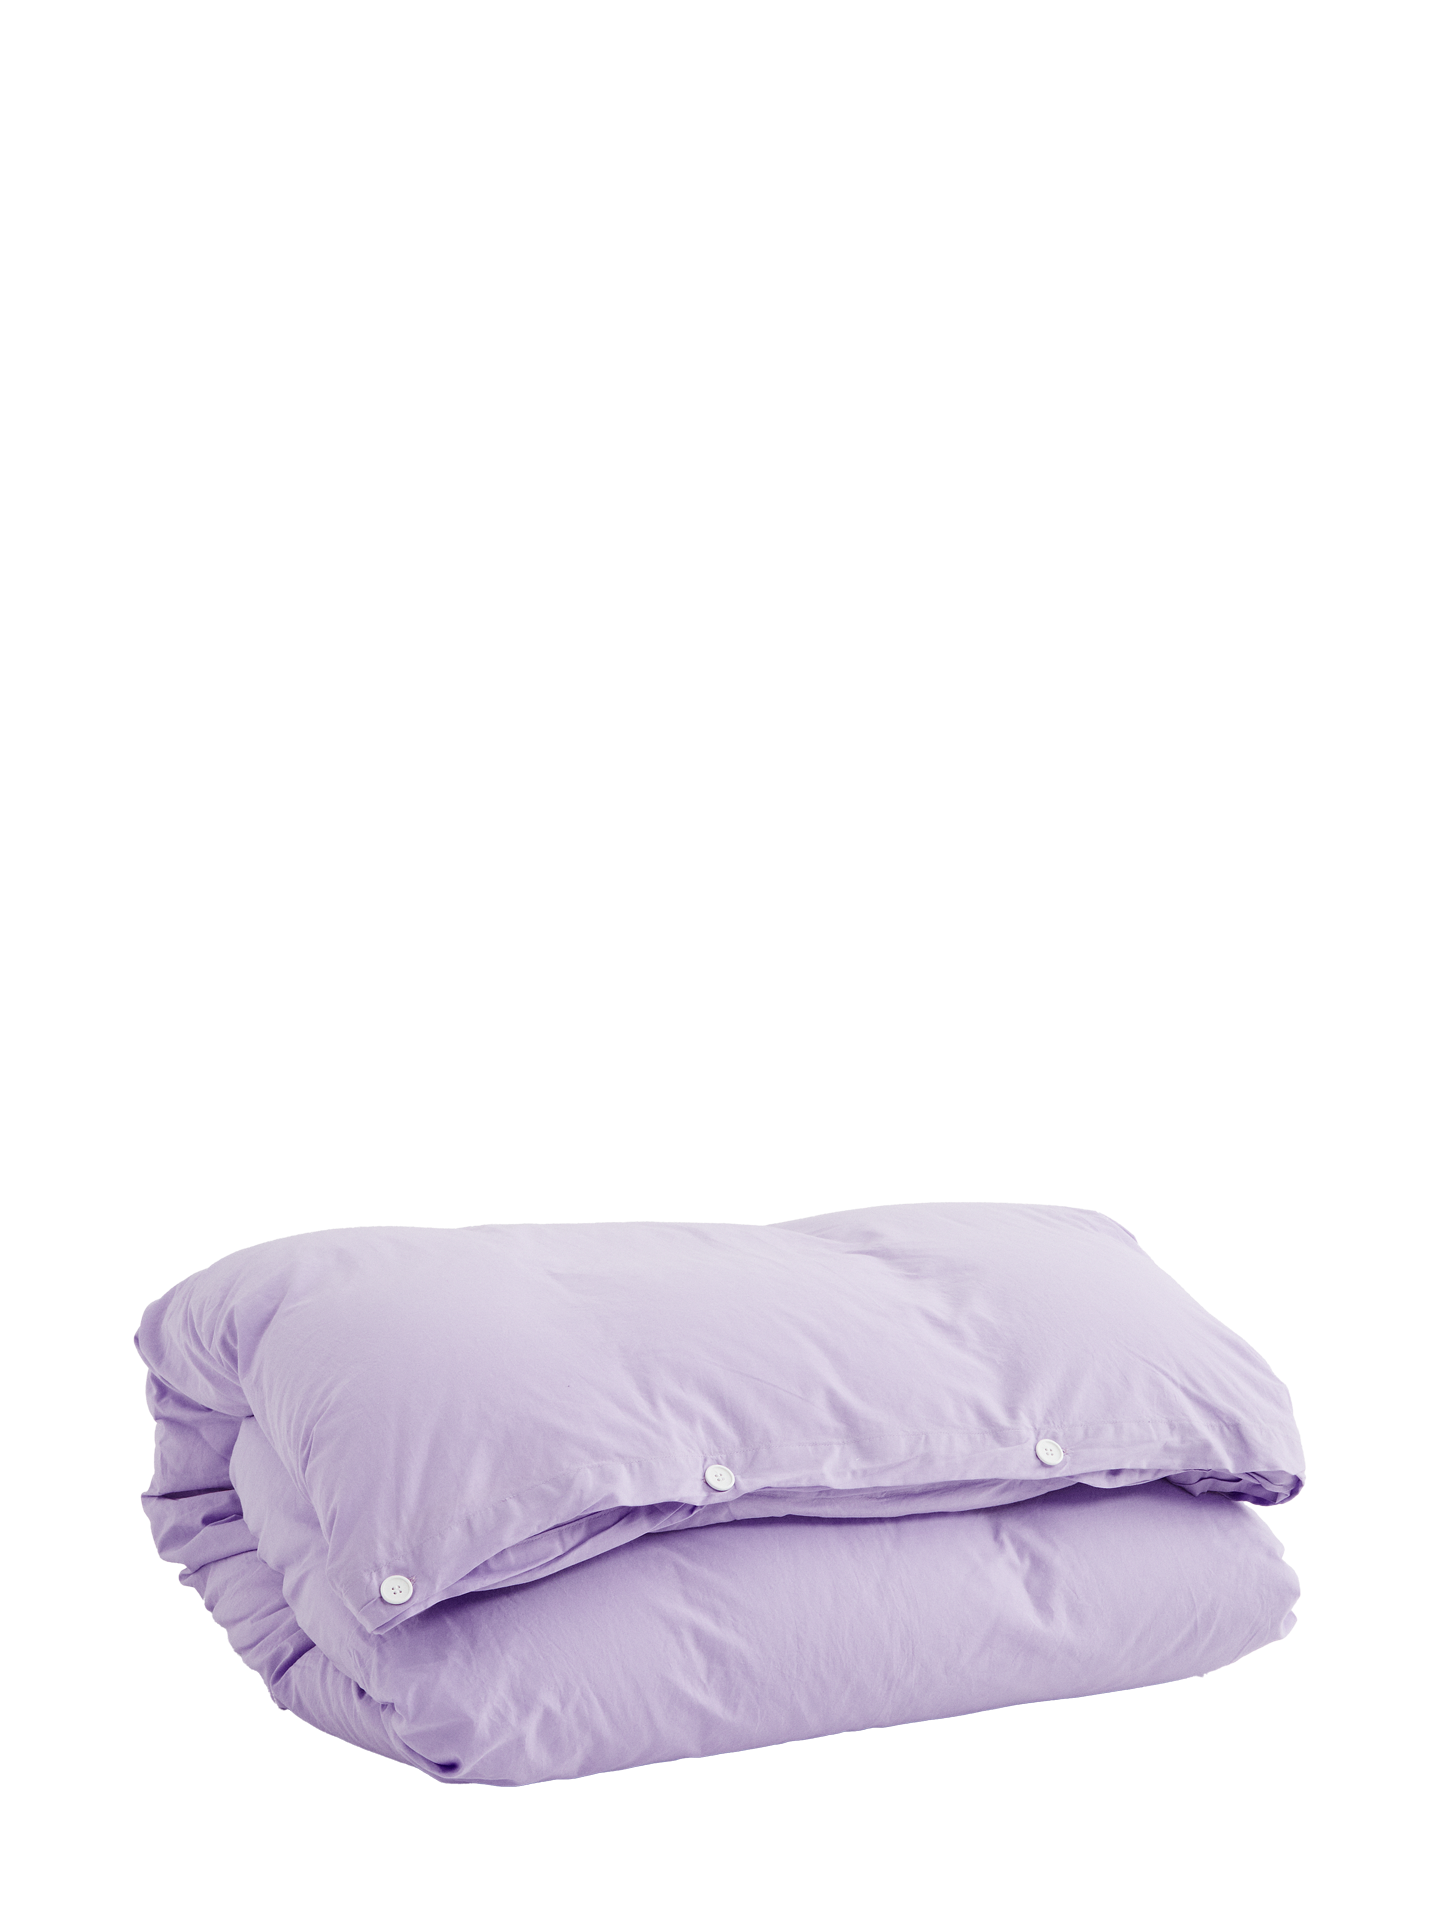 Percale Single Duvet Cover, Lavender